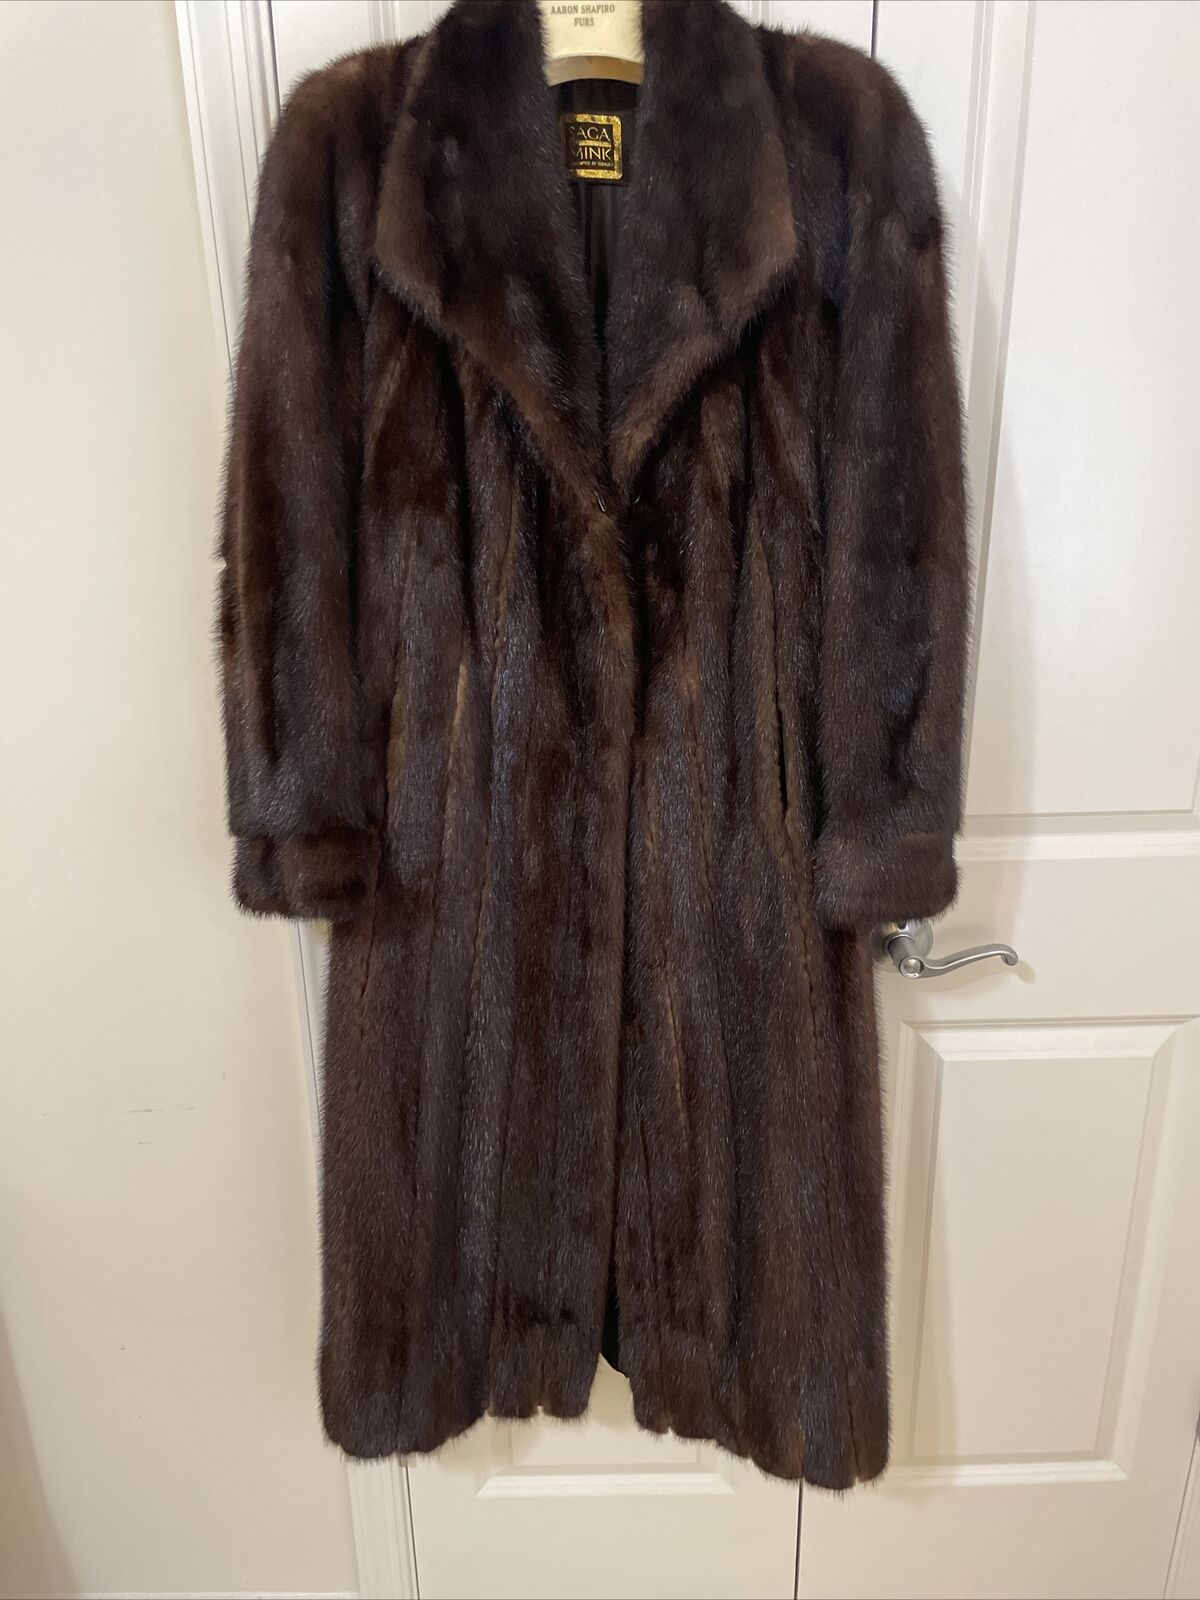 Saga Mink Fur Coat Size 8 Excellent Condition | eBay